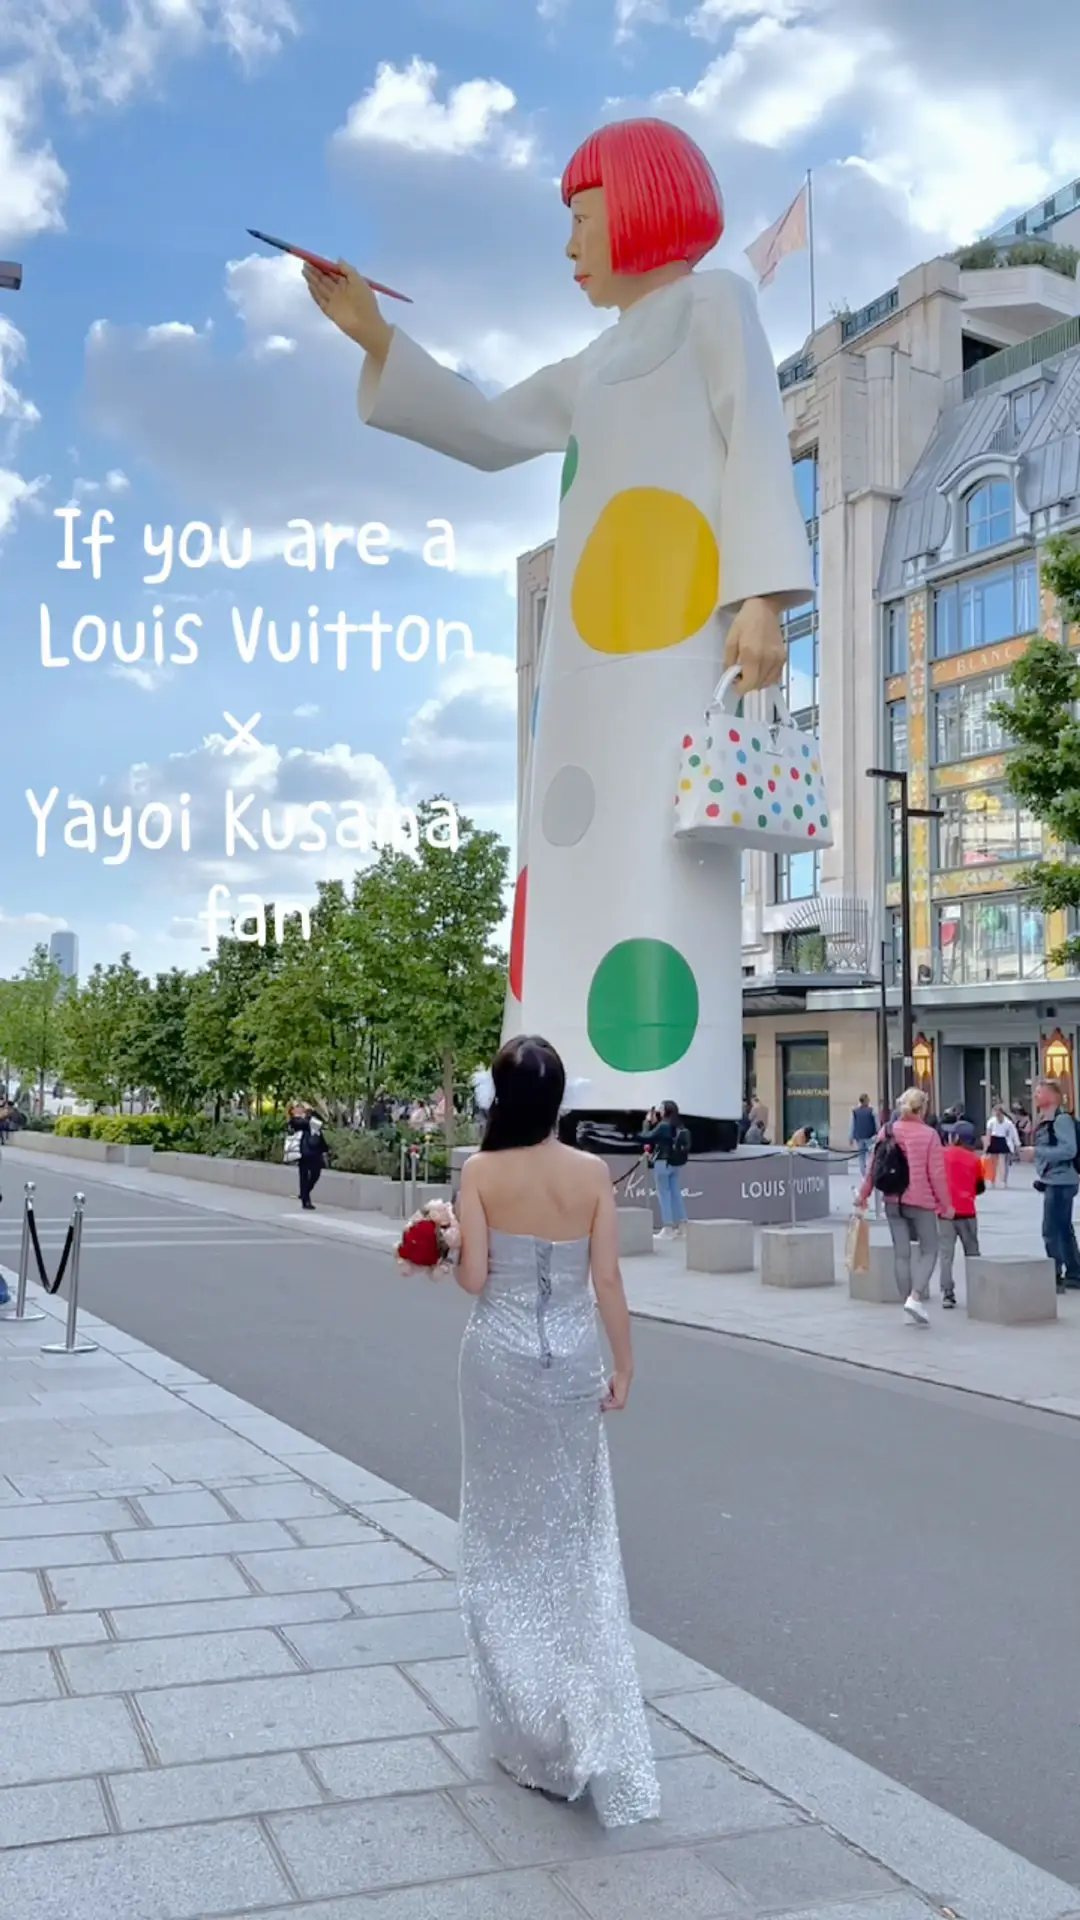 Louis Vuitton Rivoli PM Monogram  Preowned Louis Vuitton Bags - THE PURSE  AFFAIR